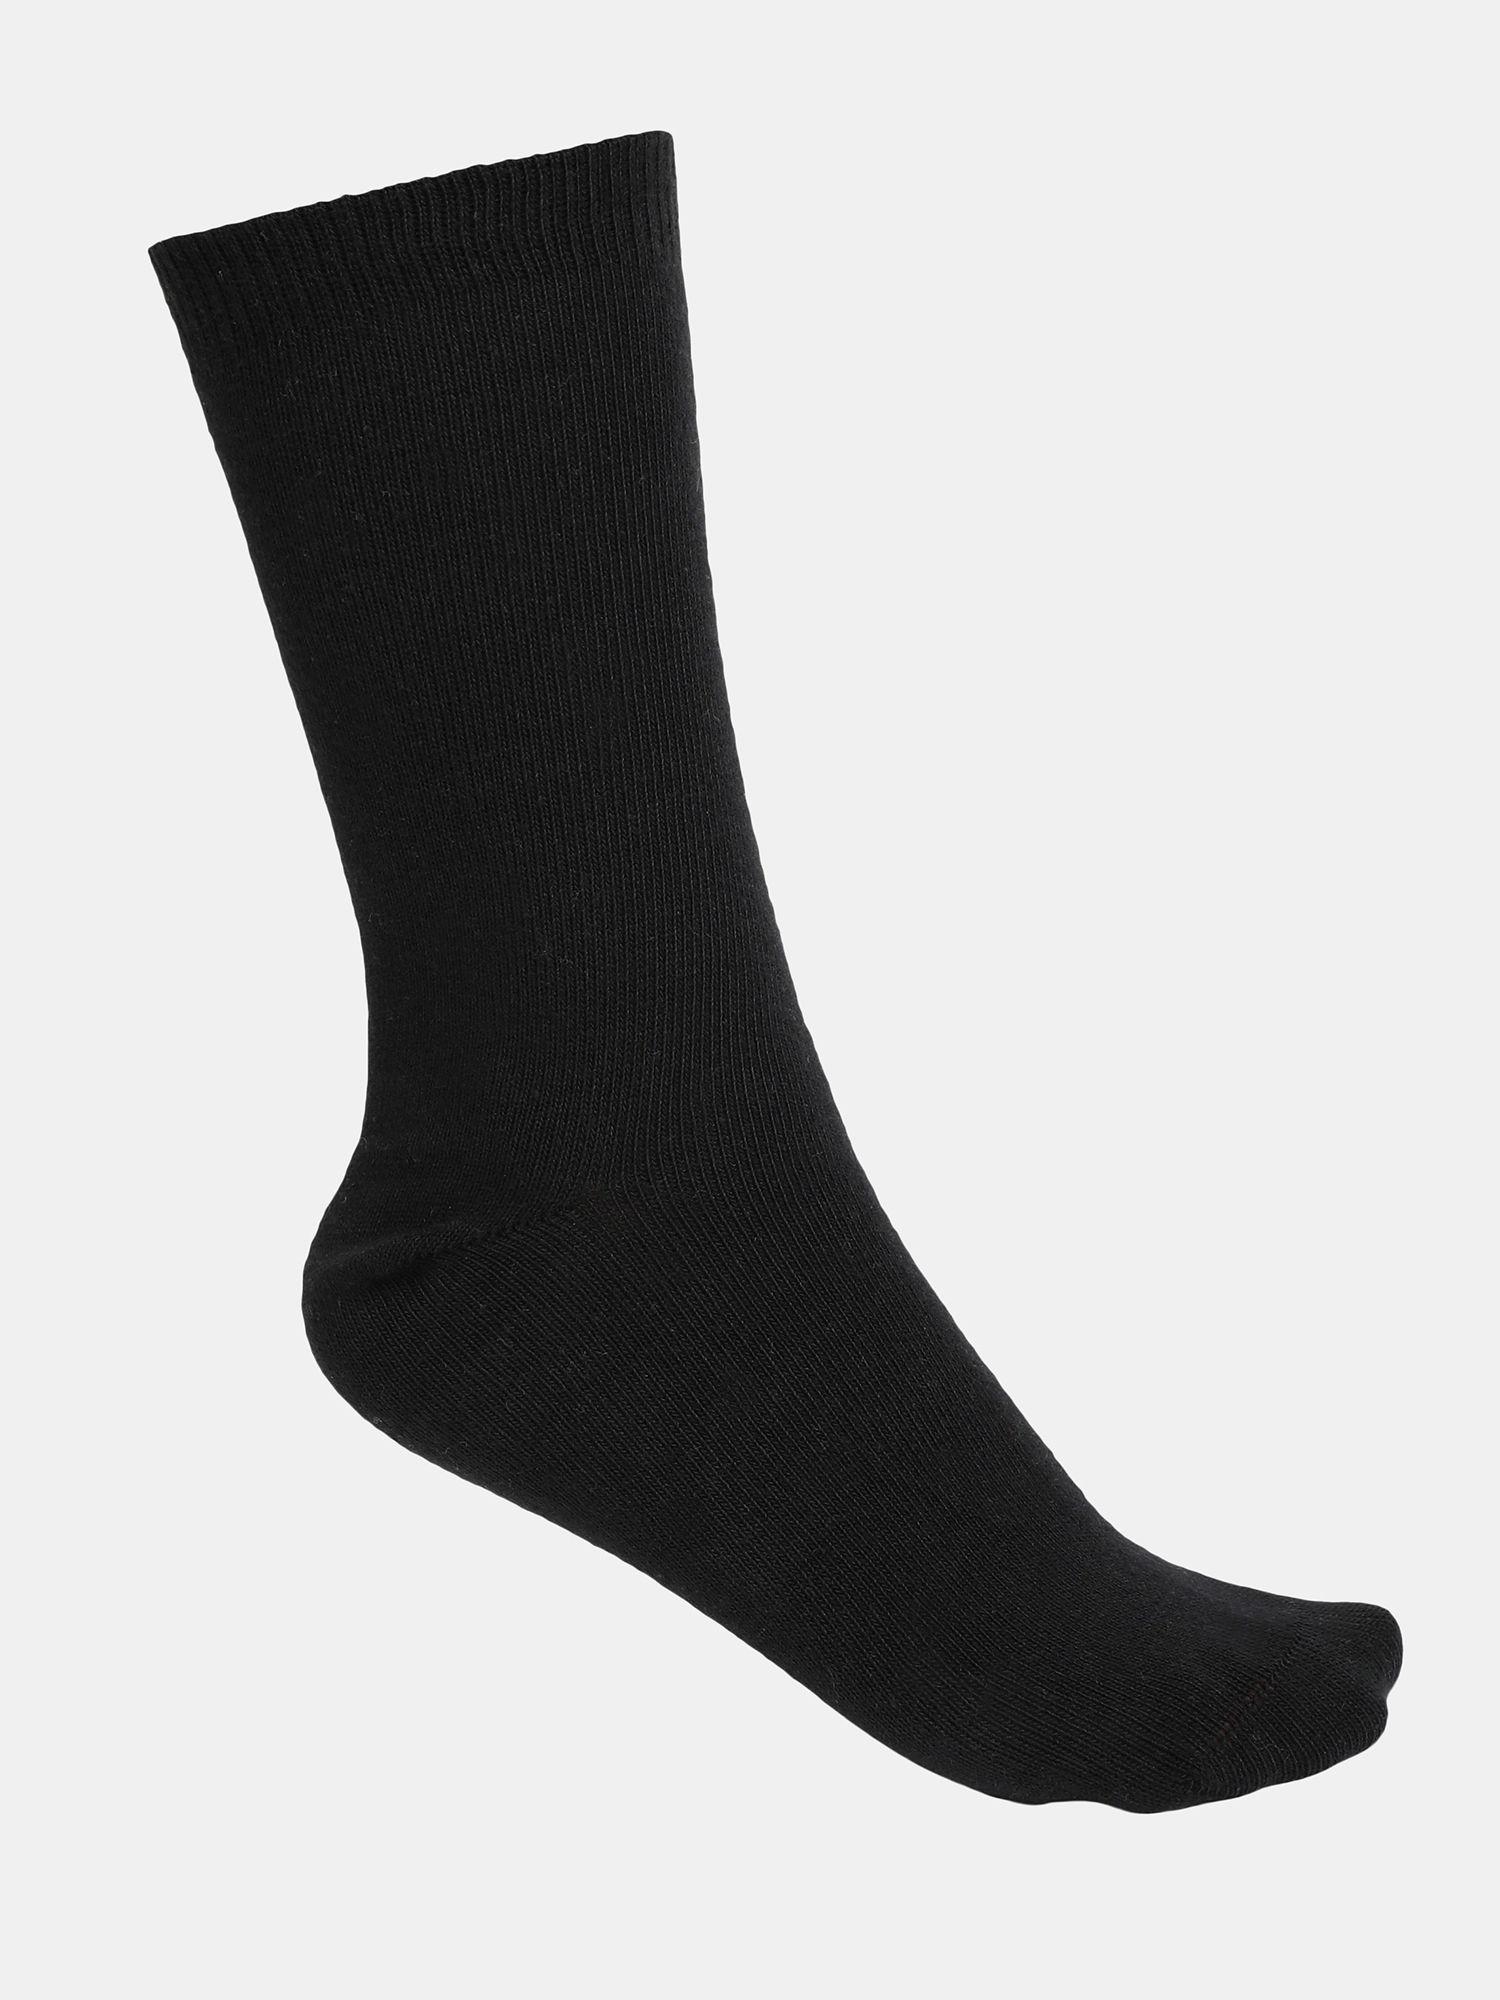 7800 Unisex Cotton Nylon Stretch Calf Length Socks - Black